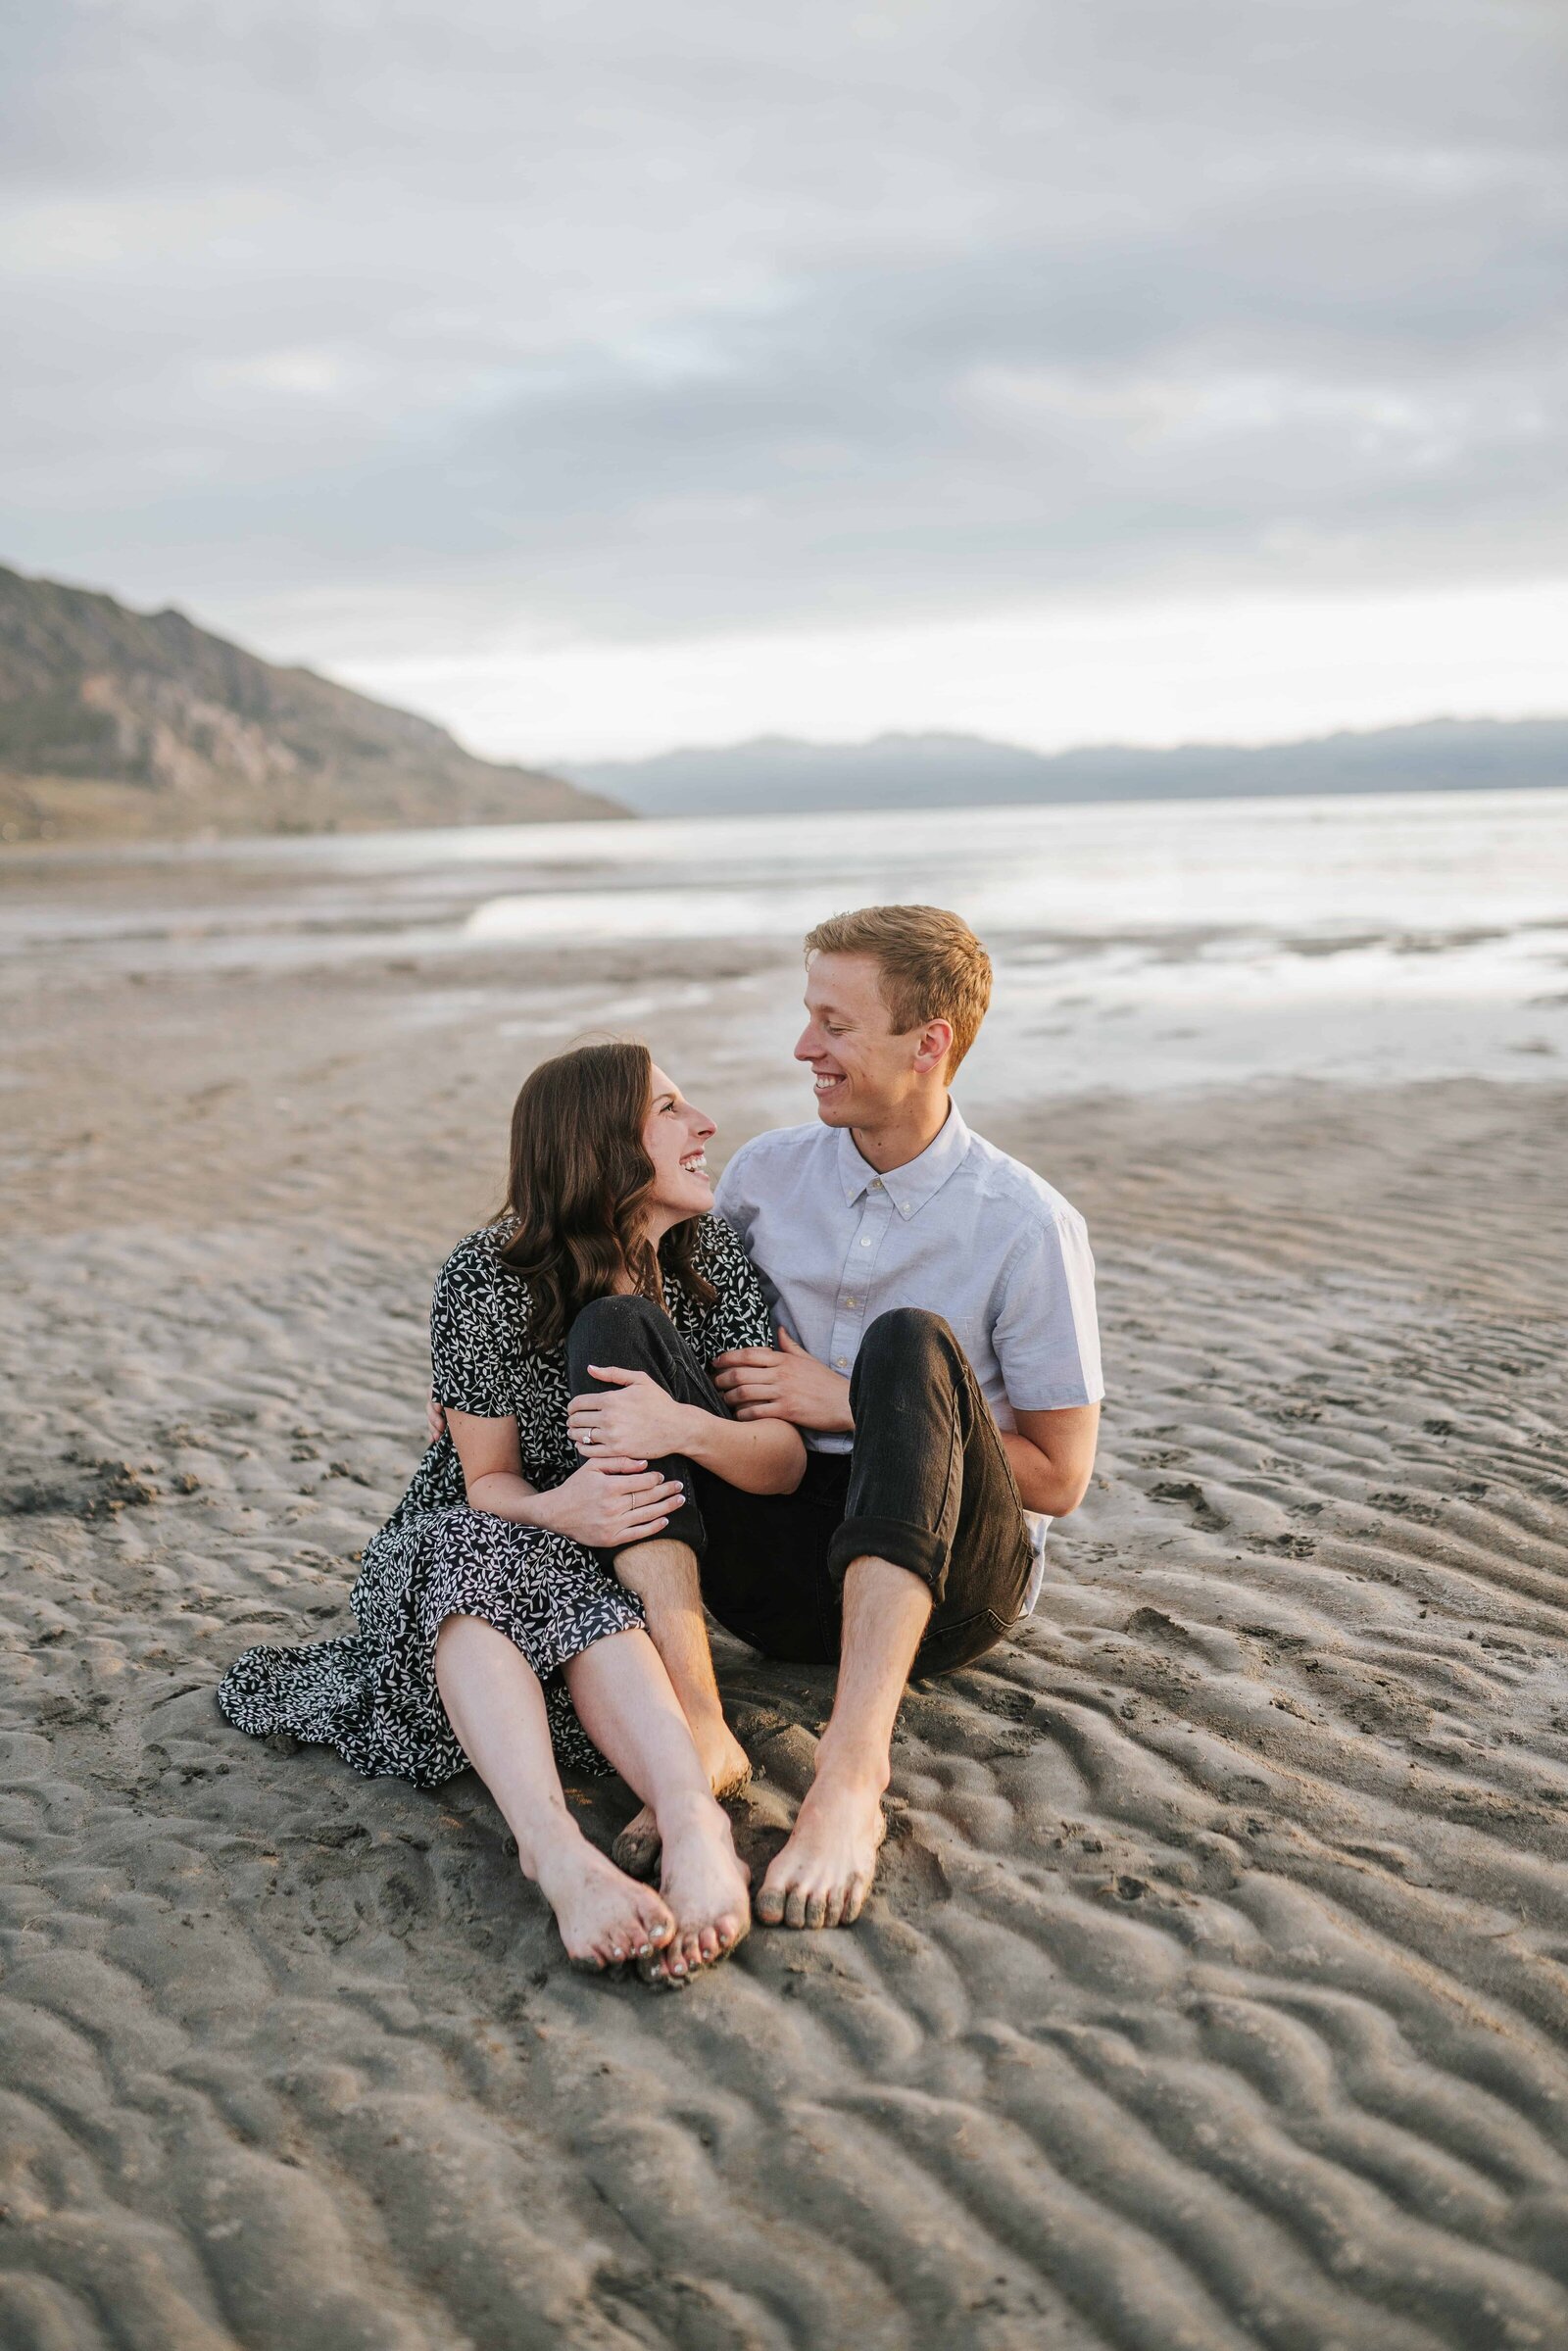 Lake Tahoe wedding photographer captures newly engaged couple on beach in Lake Tahoe